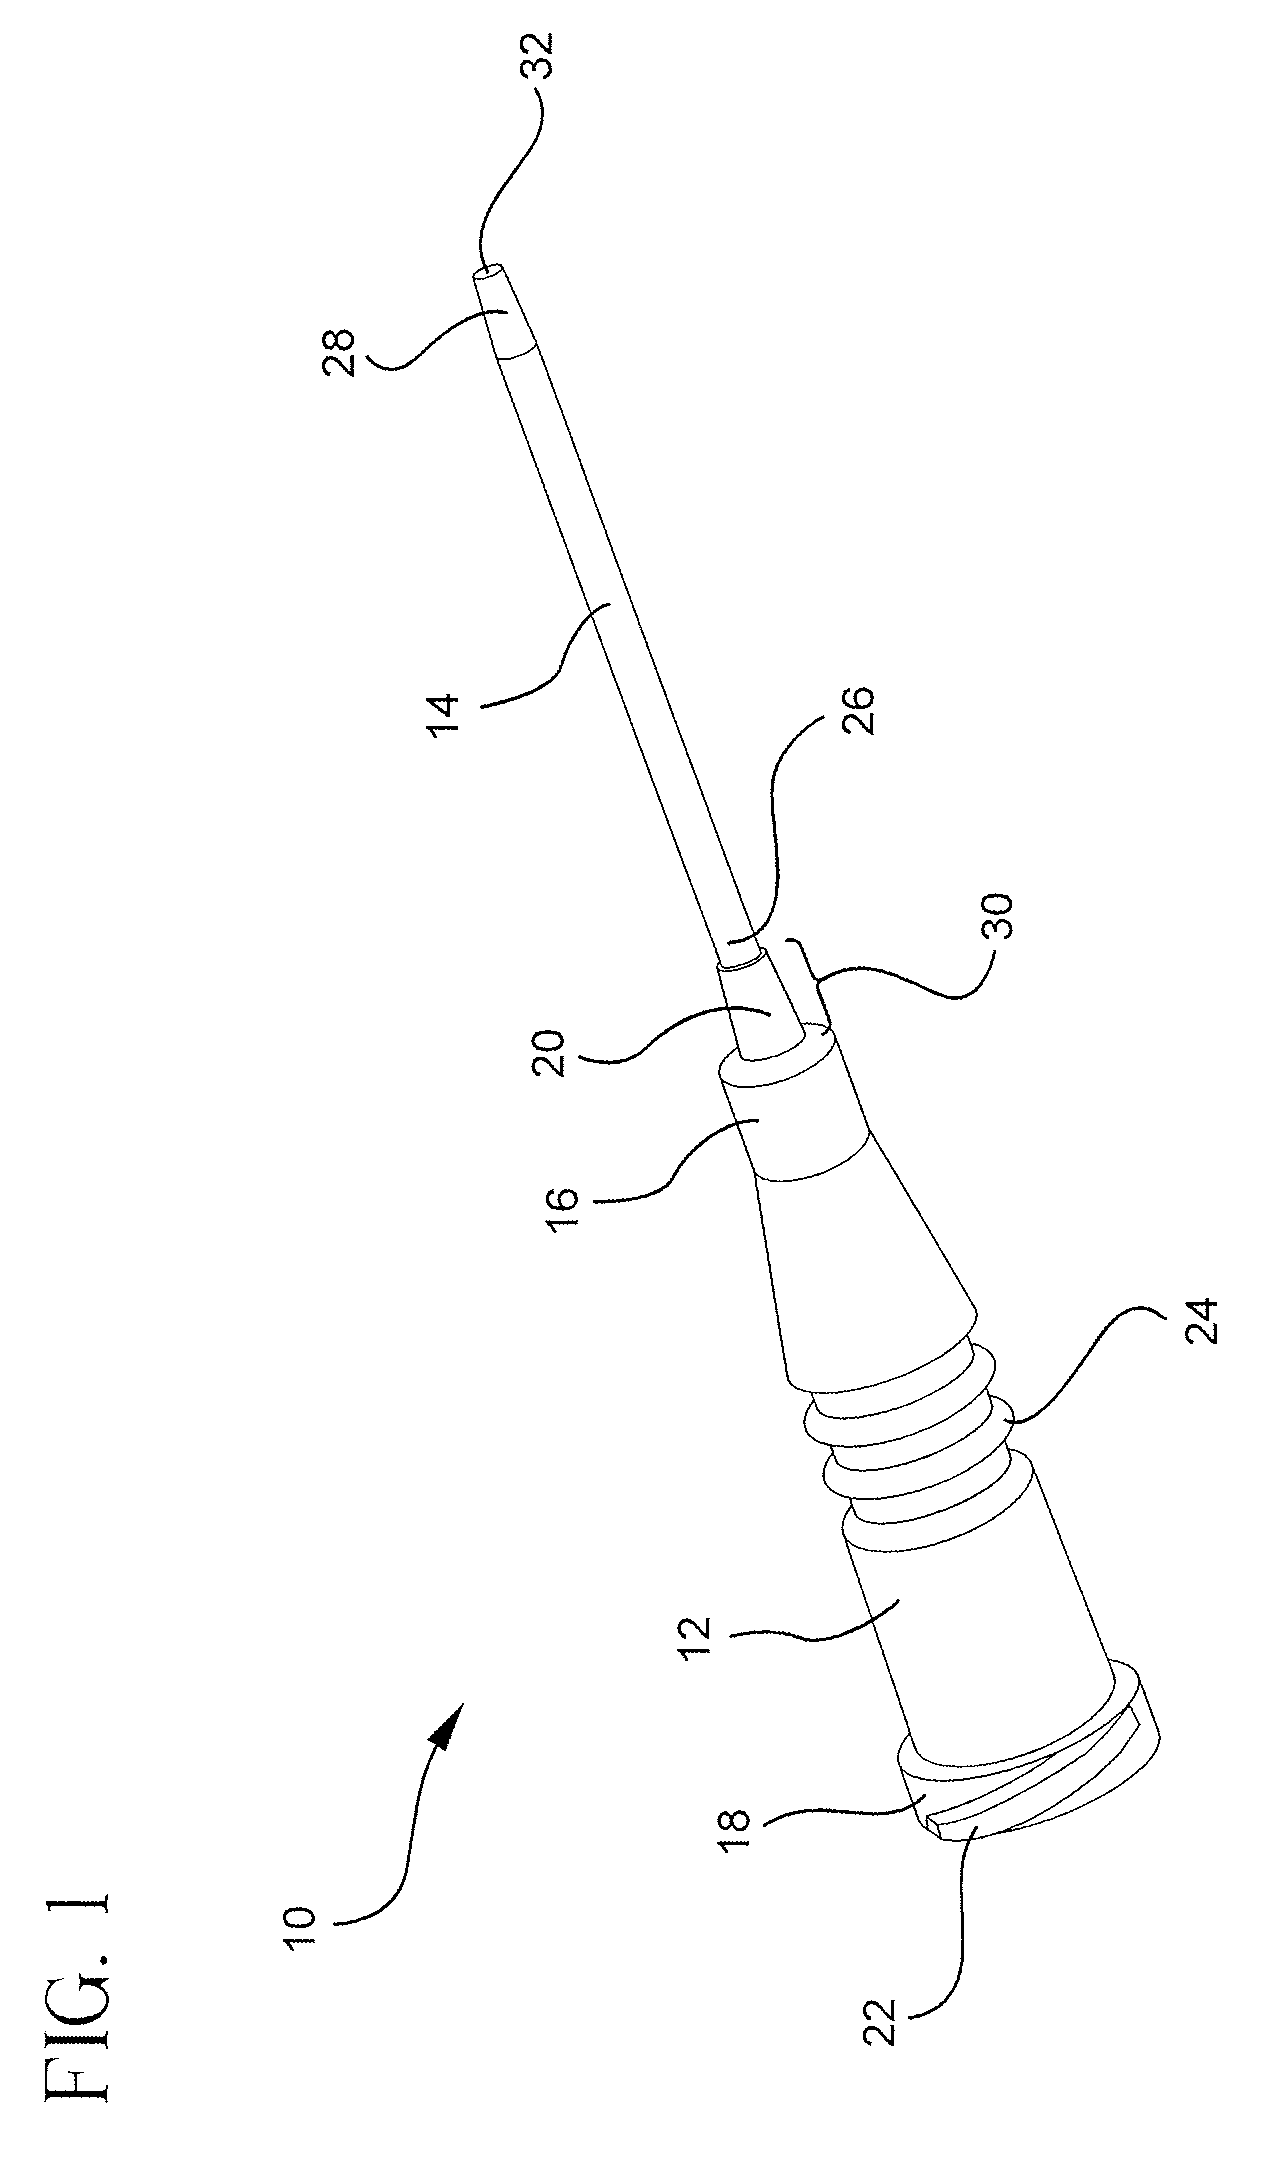 Anti-occlusion catheter adapter